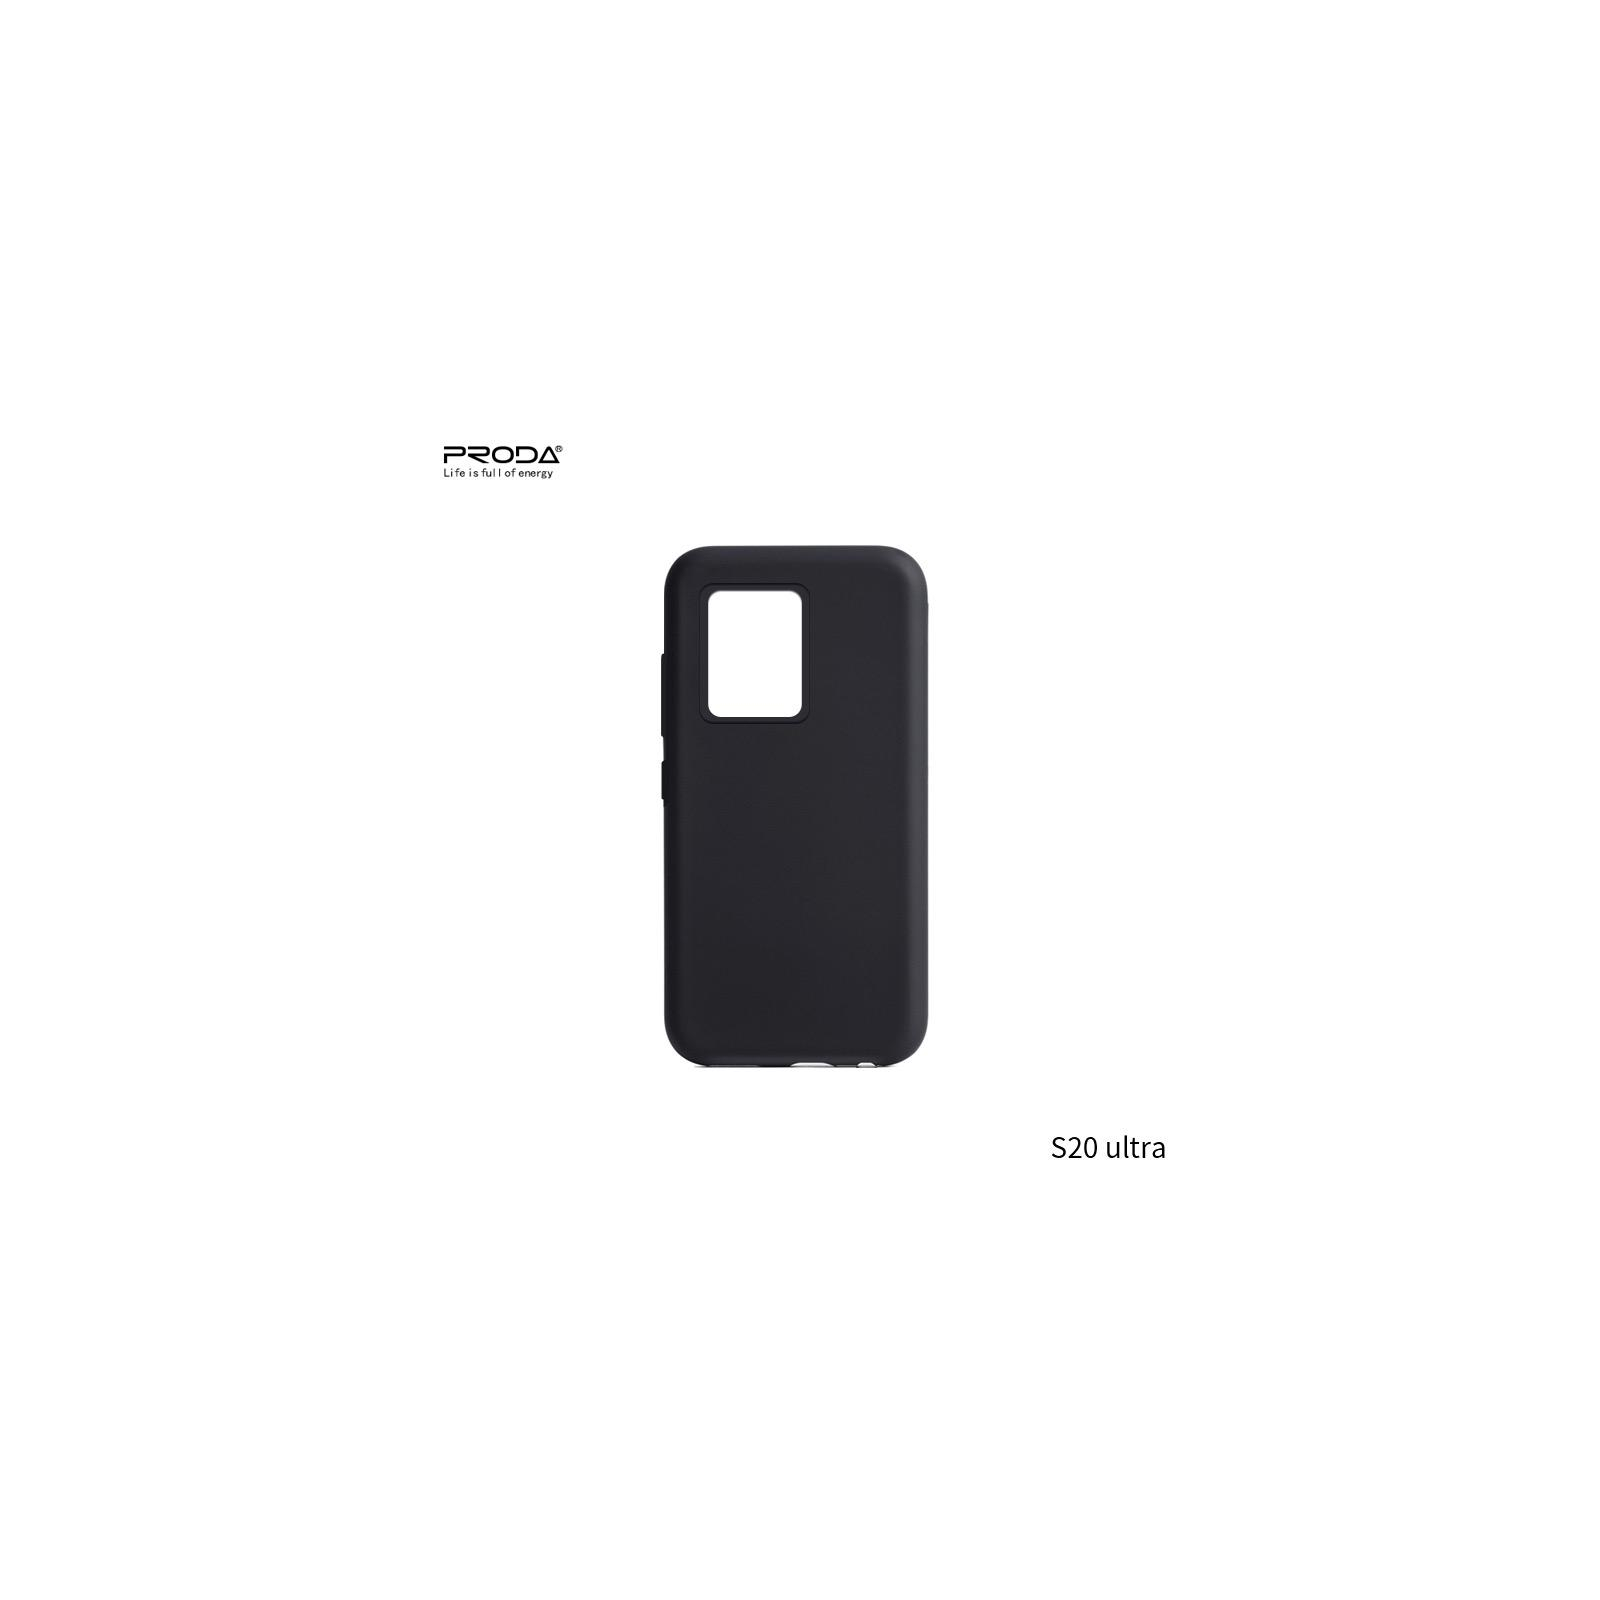 Чехол для мобильного телефона Proda Soft-Case для Samsung S20 ultra Black (XK-PRD-S20ultr-BK)